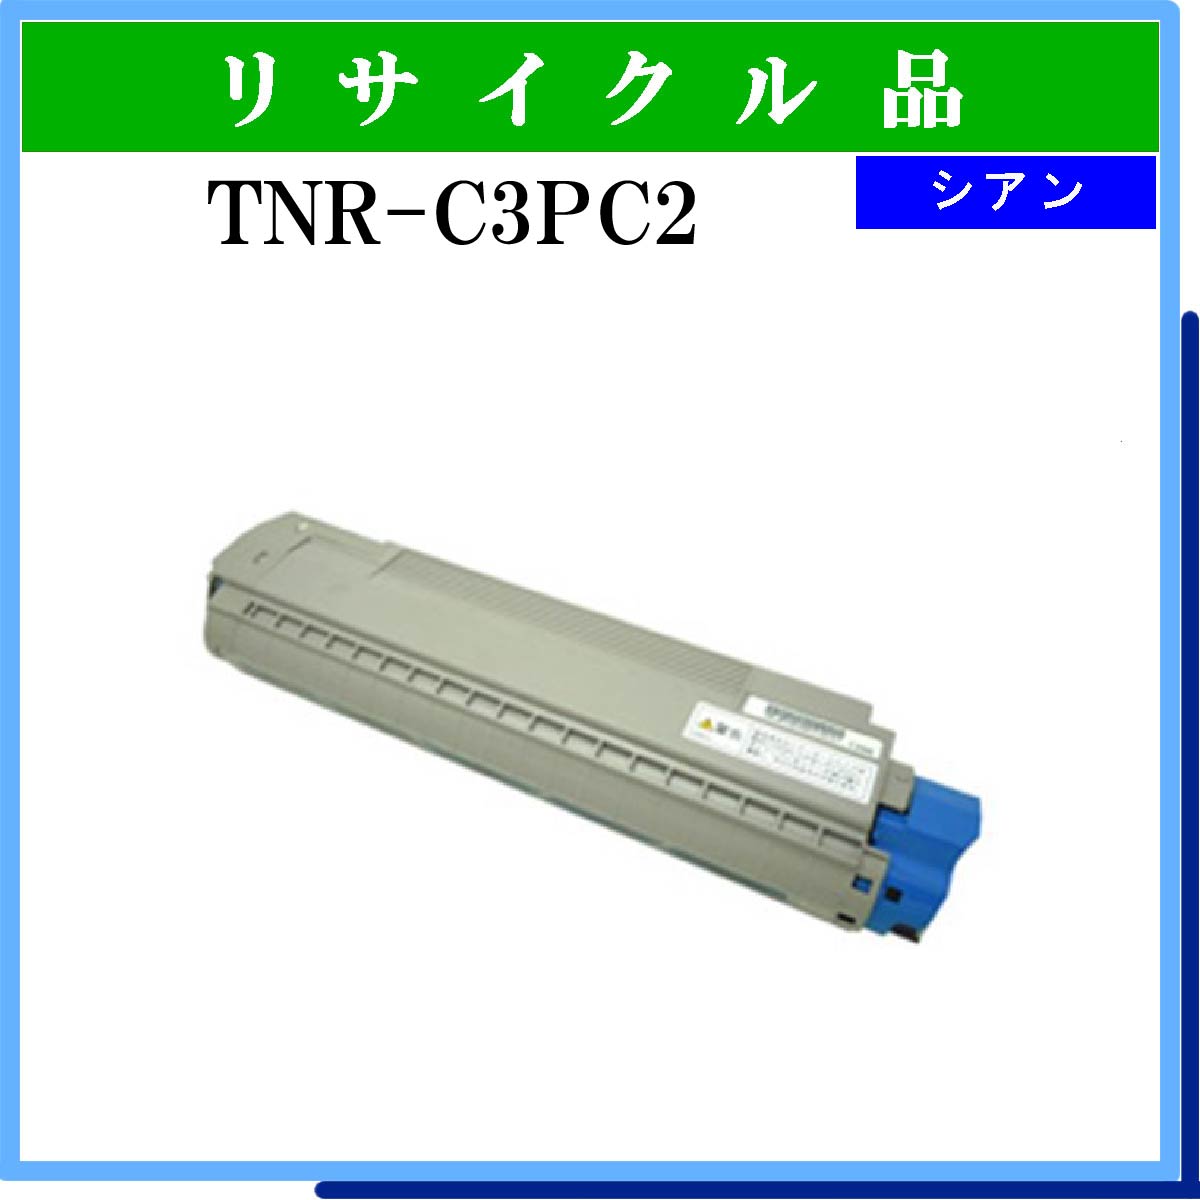 TNR-C3PC2 - ウインドウを閉じる